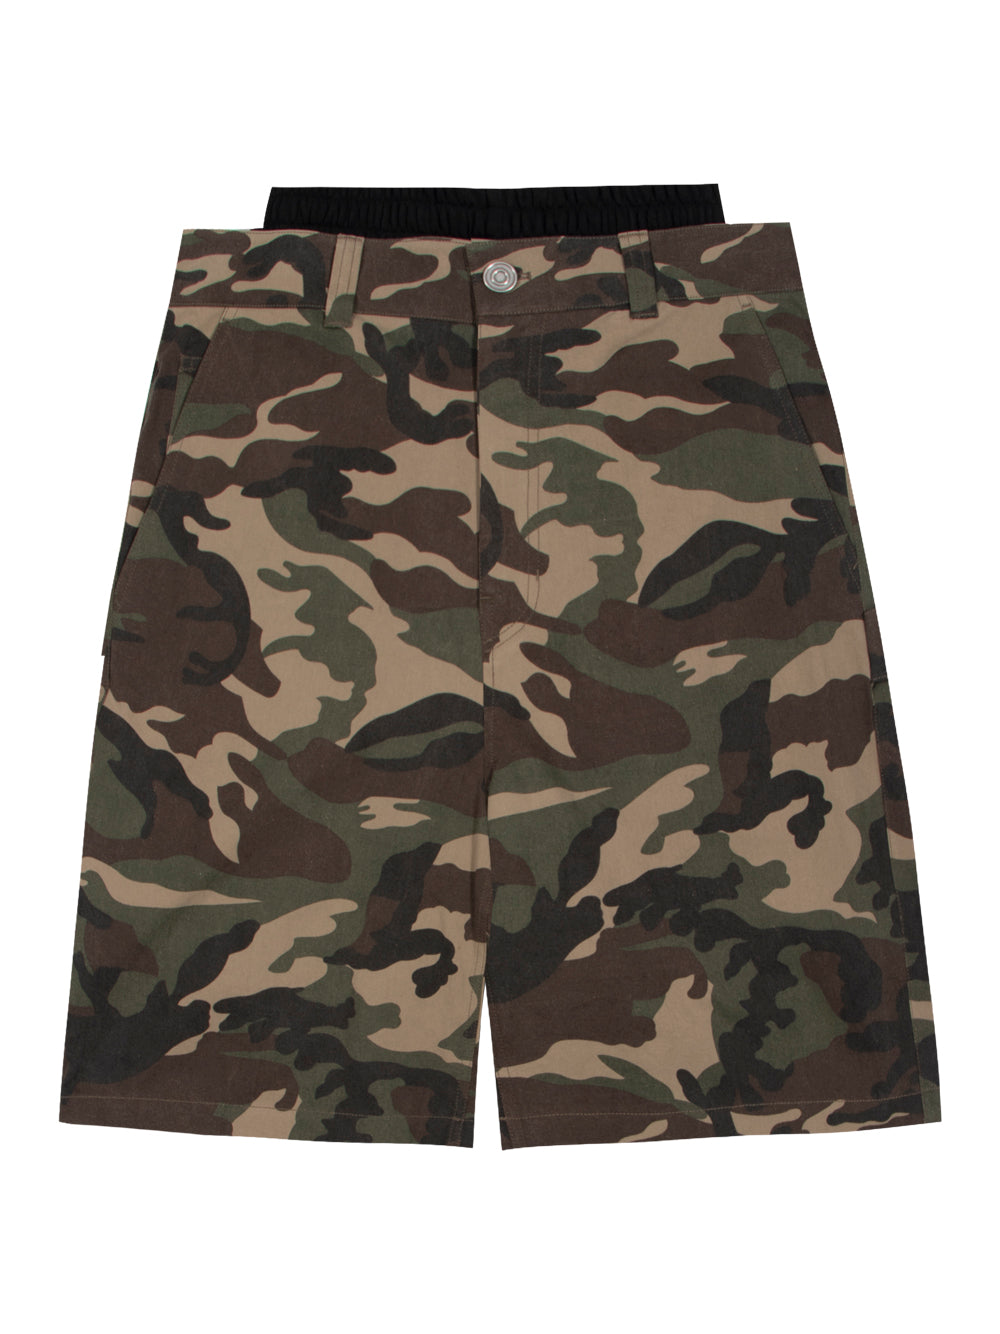 Camouflage Low-Slung Pants (Khaki)